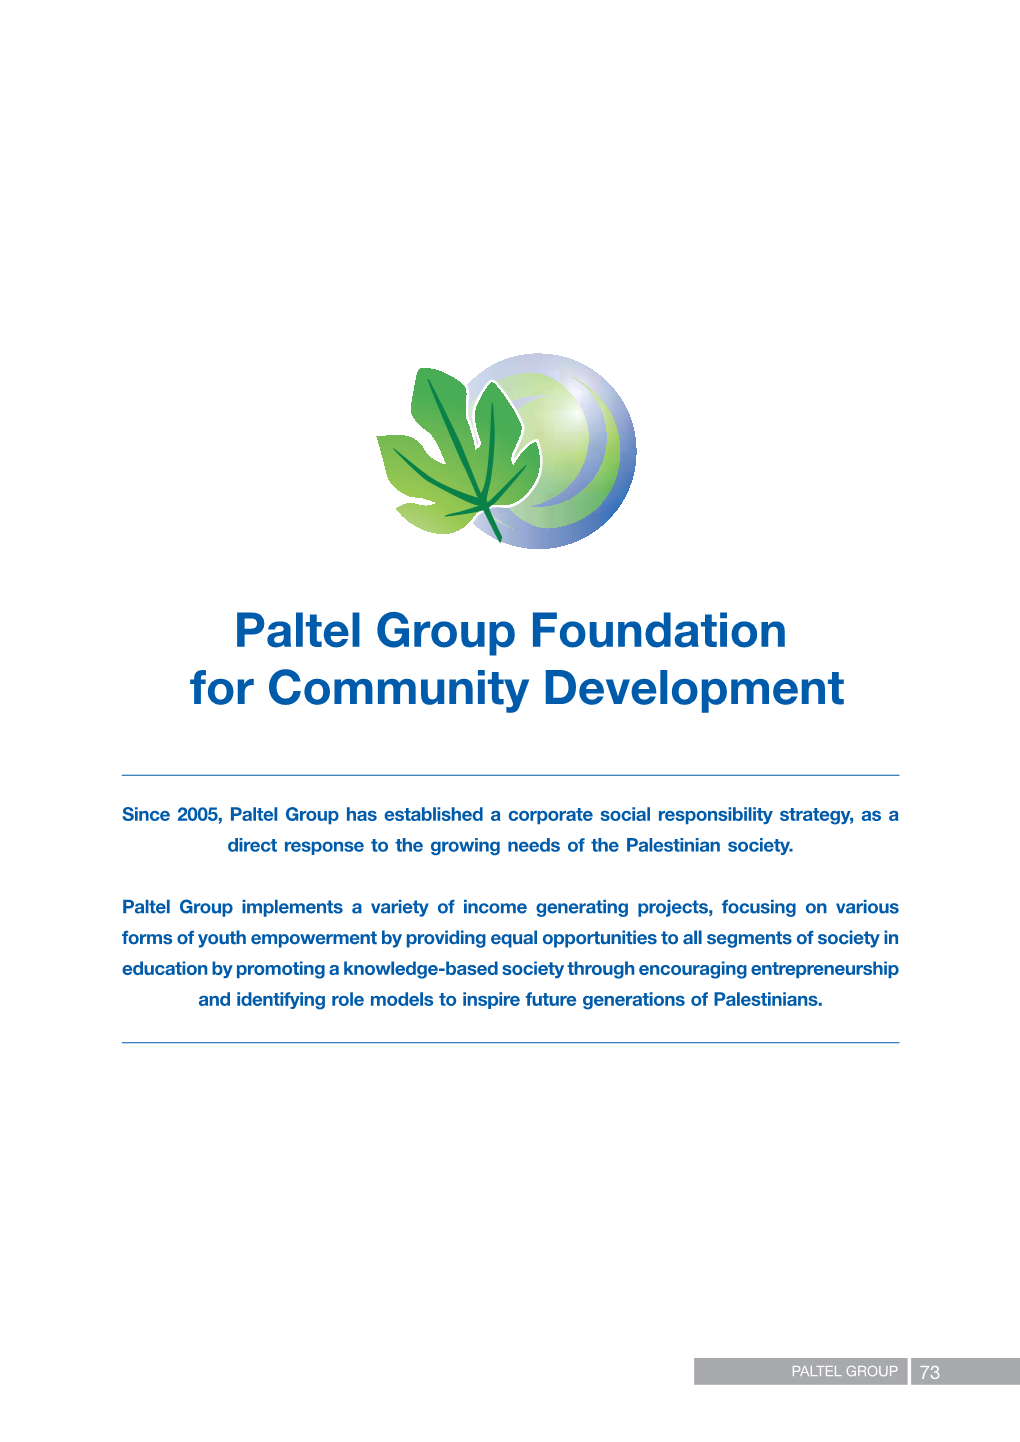 Paltel Group Foundation for Community Development